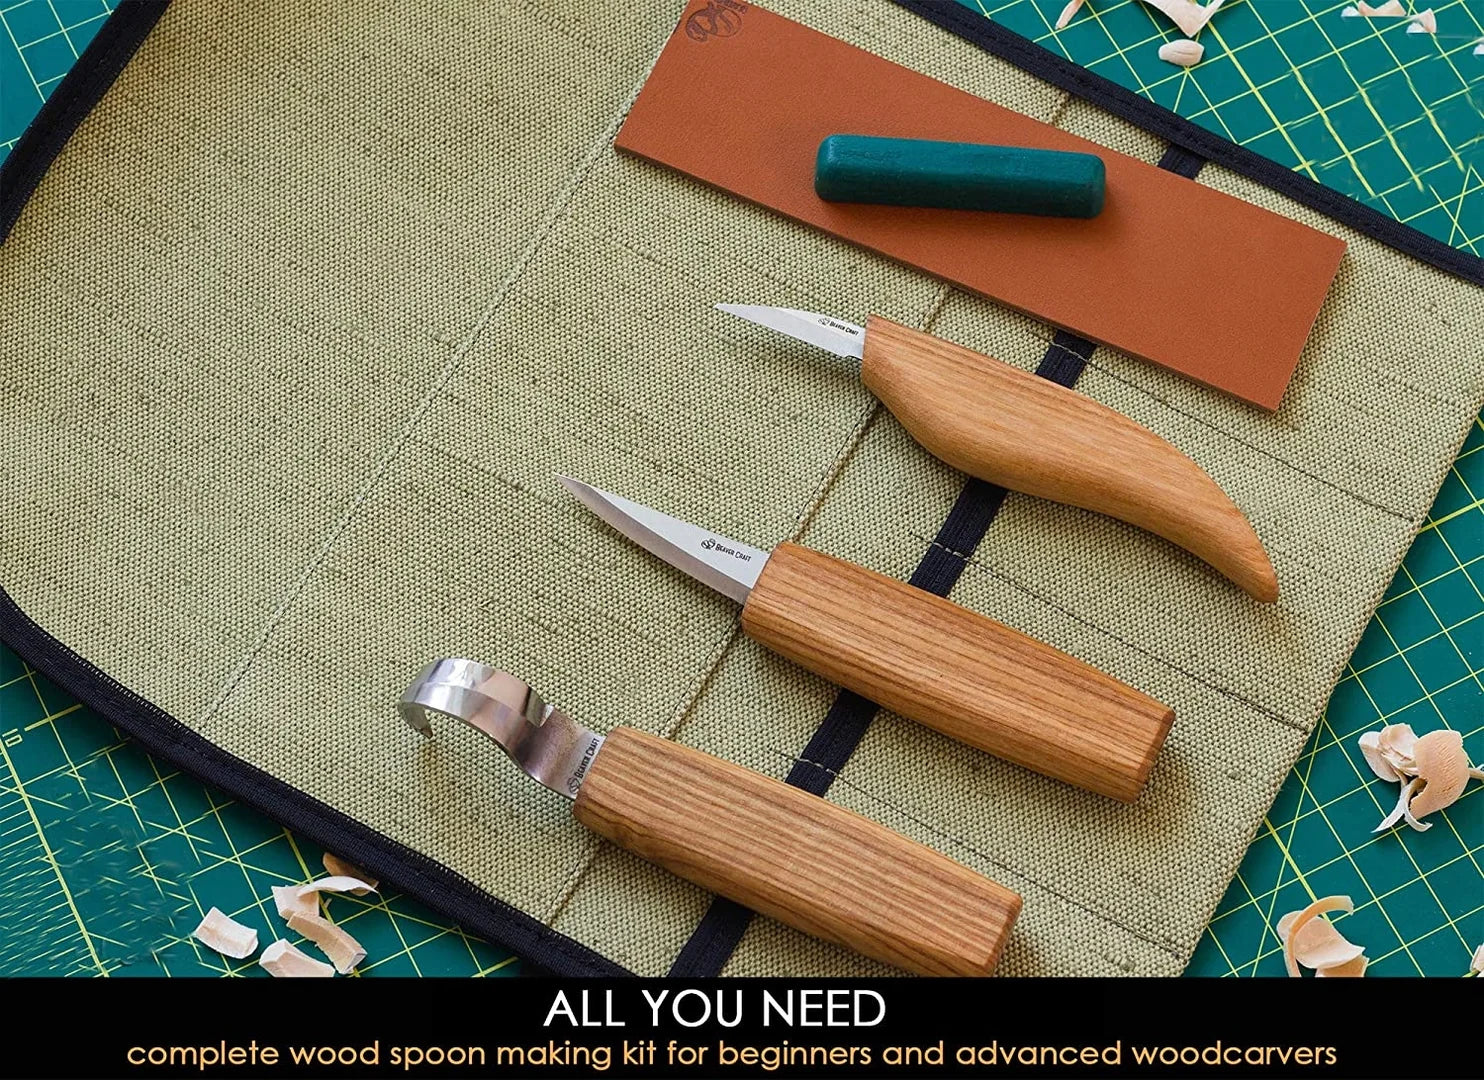 Beaver Craft C4m - Whittling Knife - The Spoon Crank